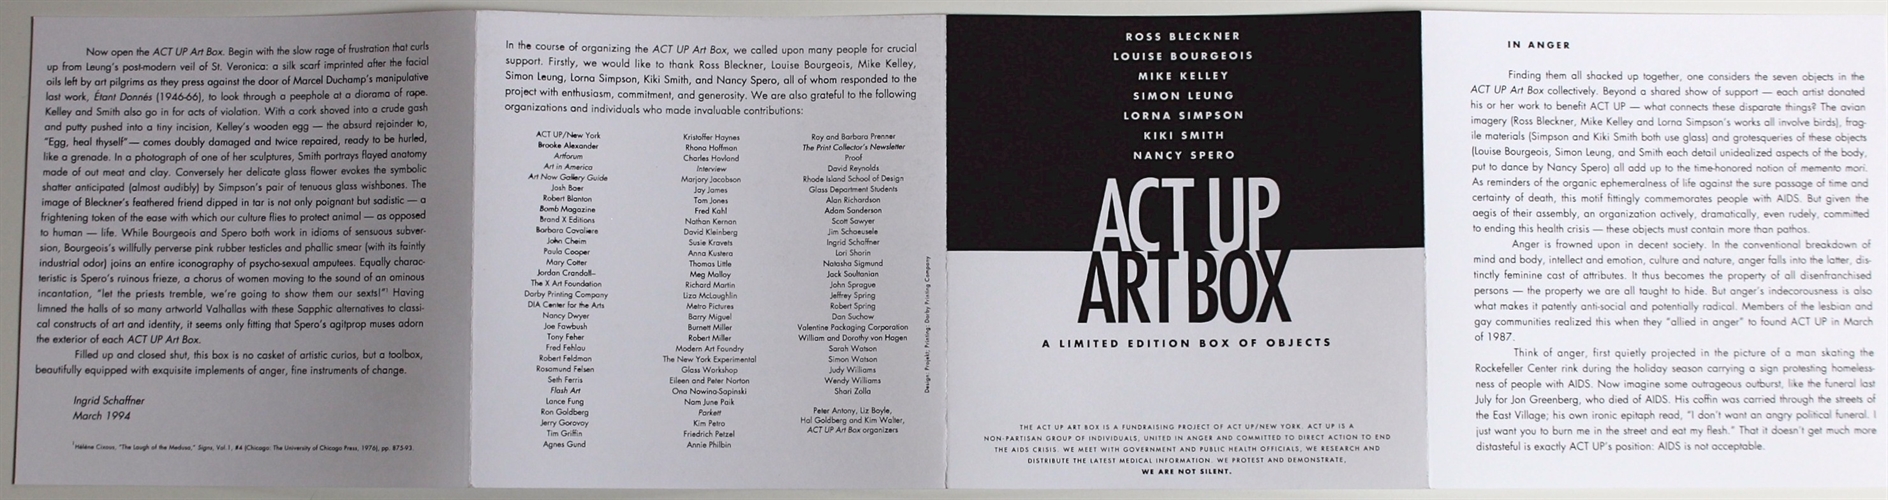 ACT UP Art Box by Various Artists on artnet